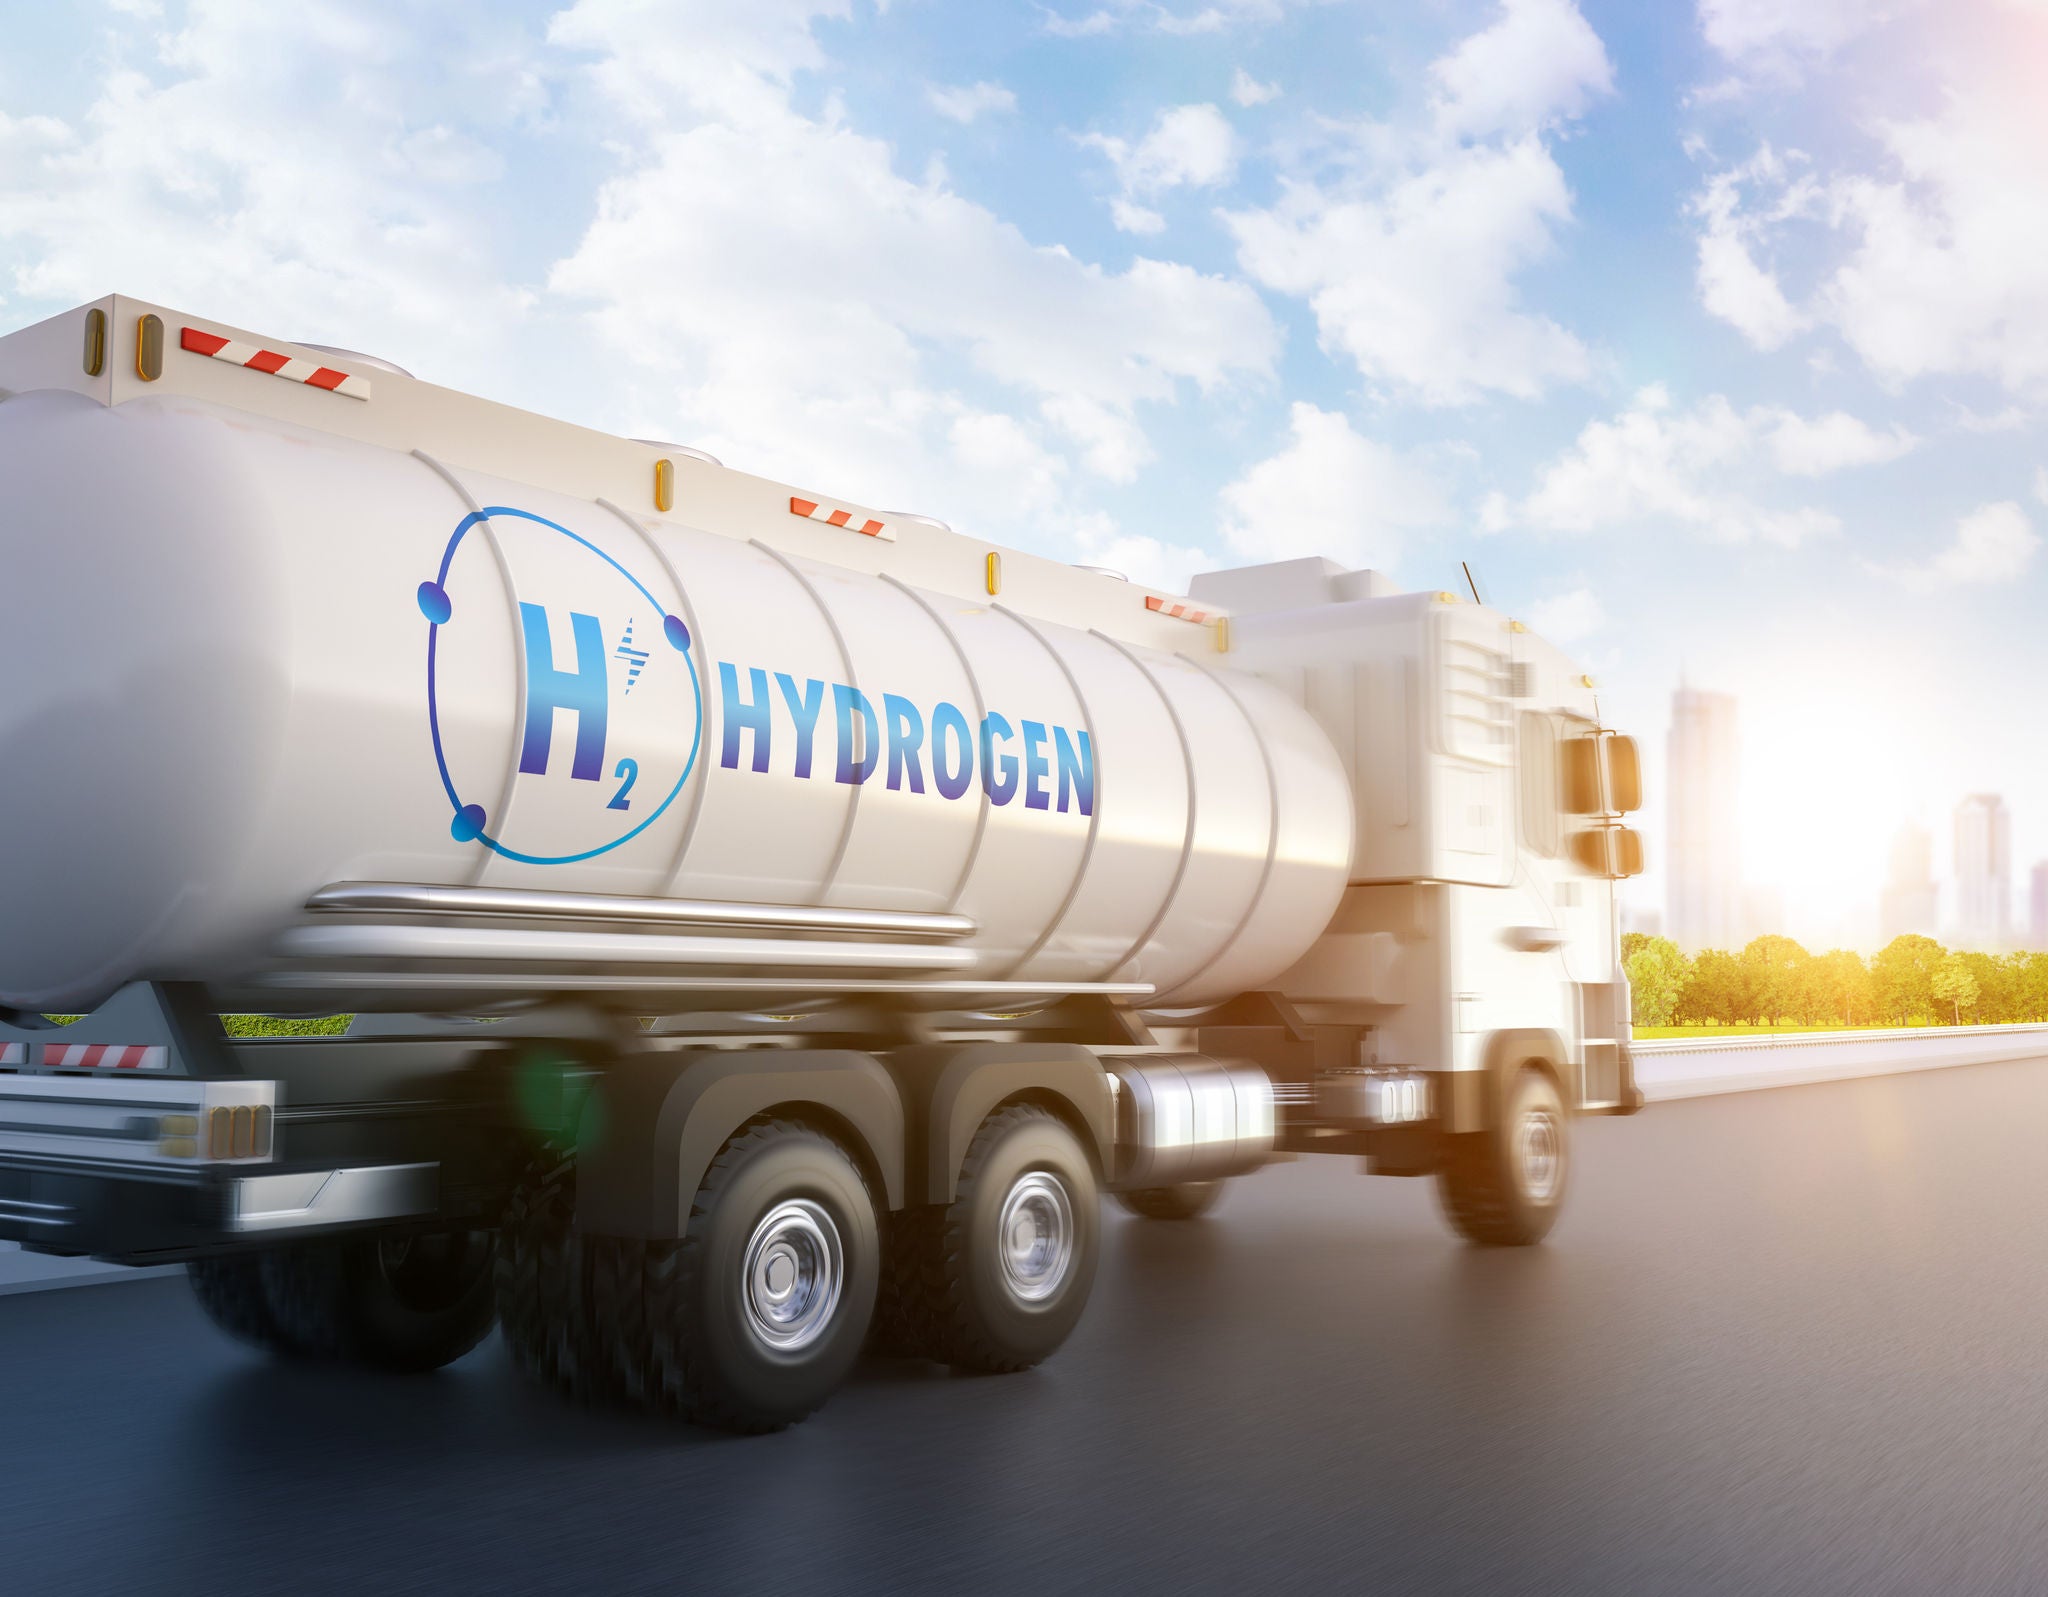 Hydrogen tanker that carries Liquid Hydrogen fuel